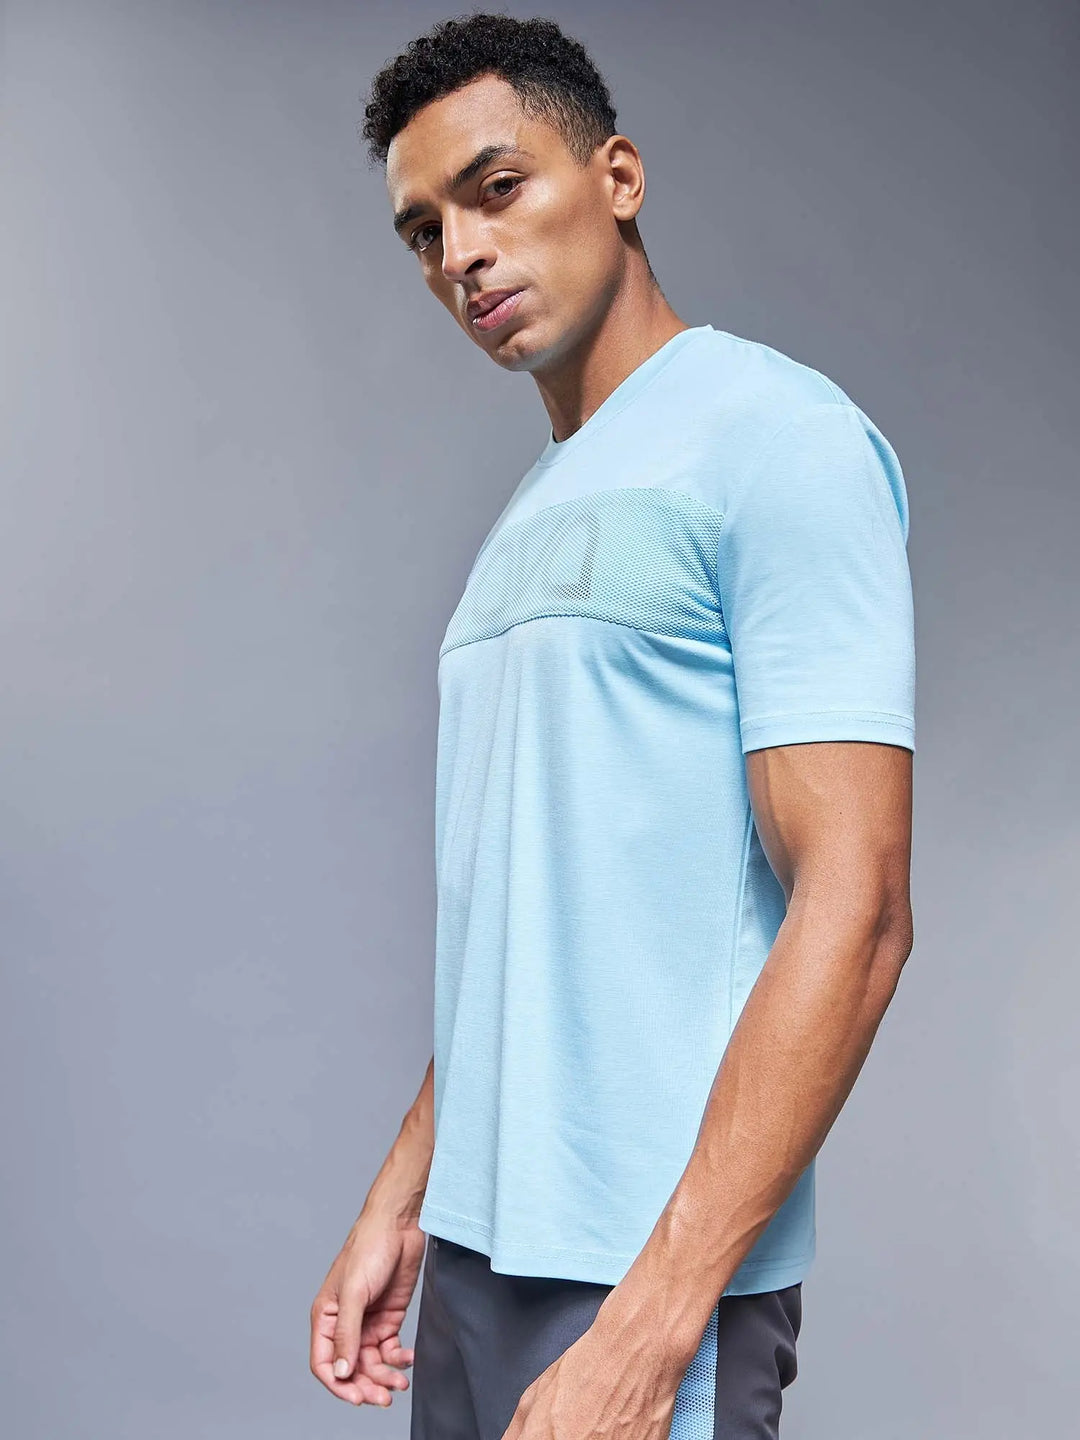 Blue Chase t-shirt CAVA athleisure